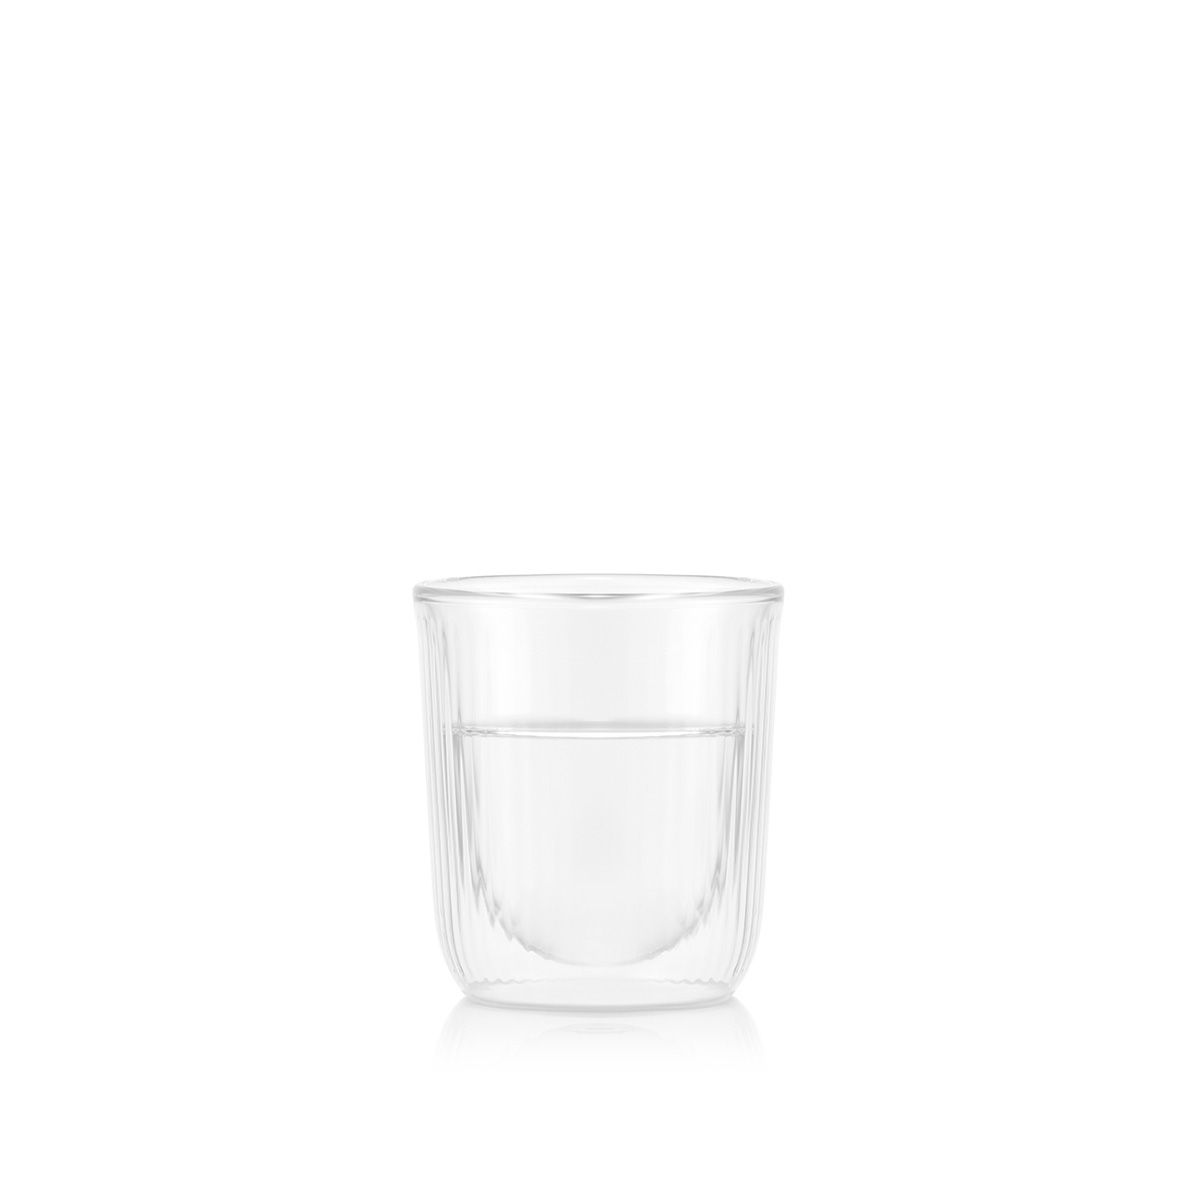 Bodum Douro set con 2 vasos de sake dobles paredes, transparentes